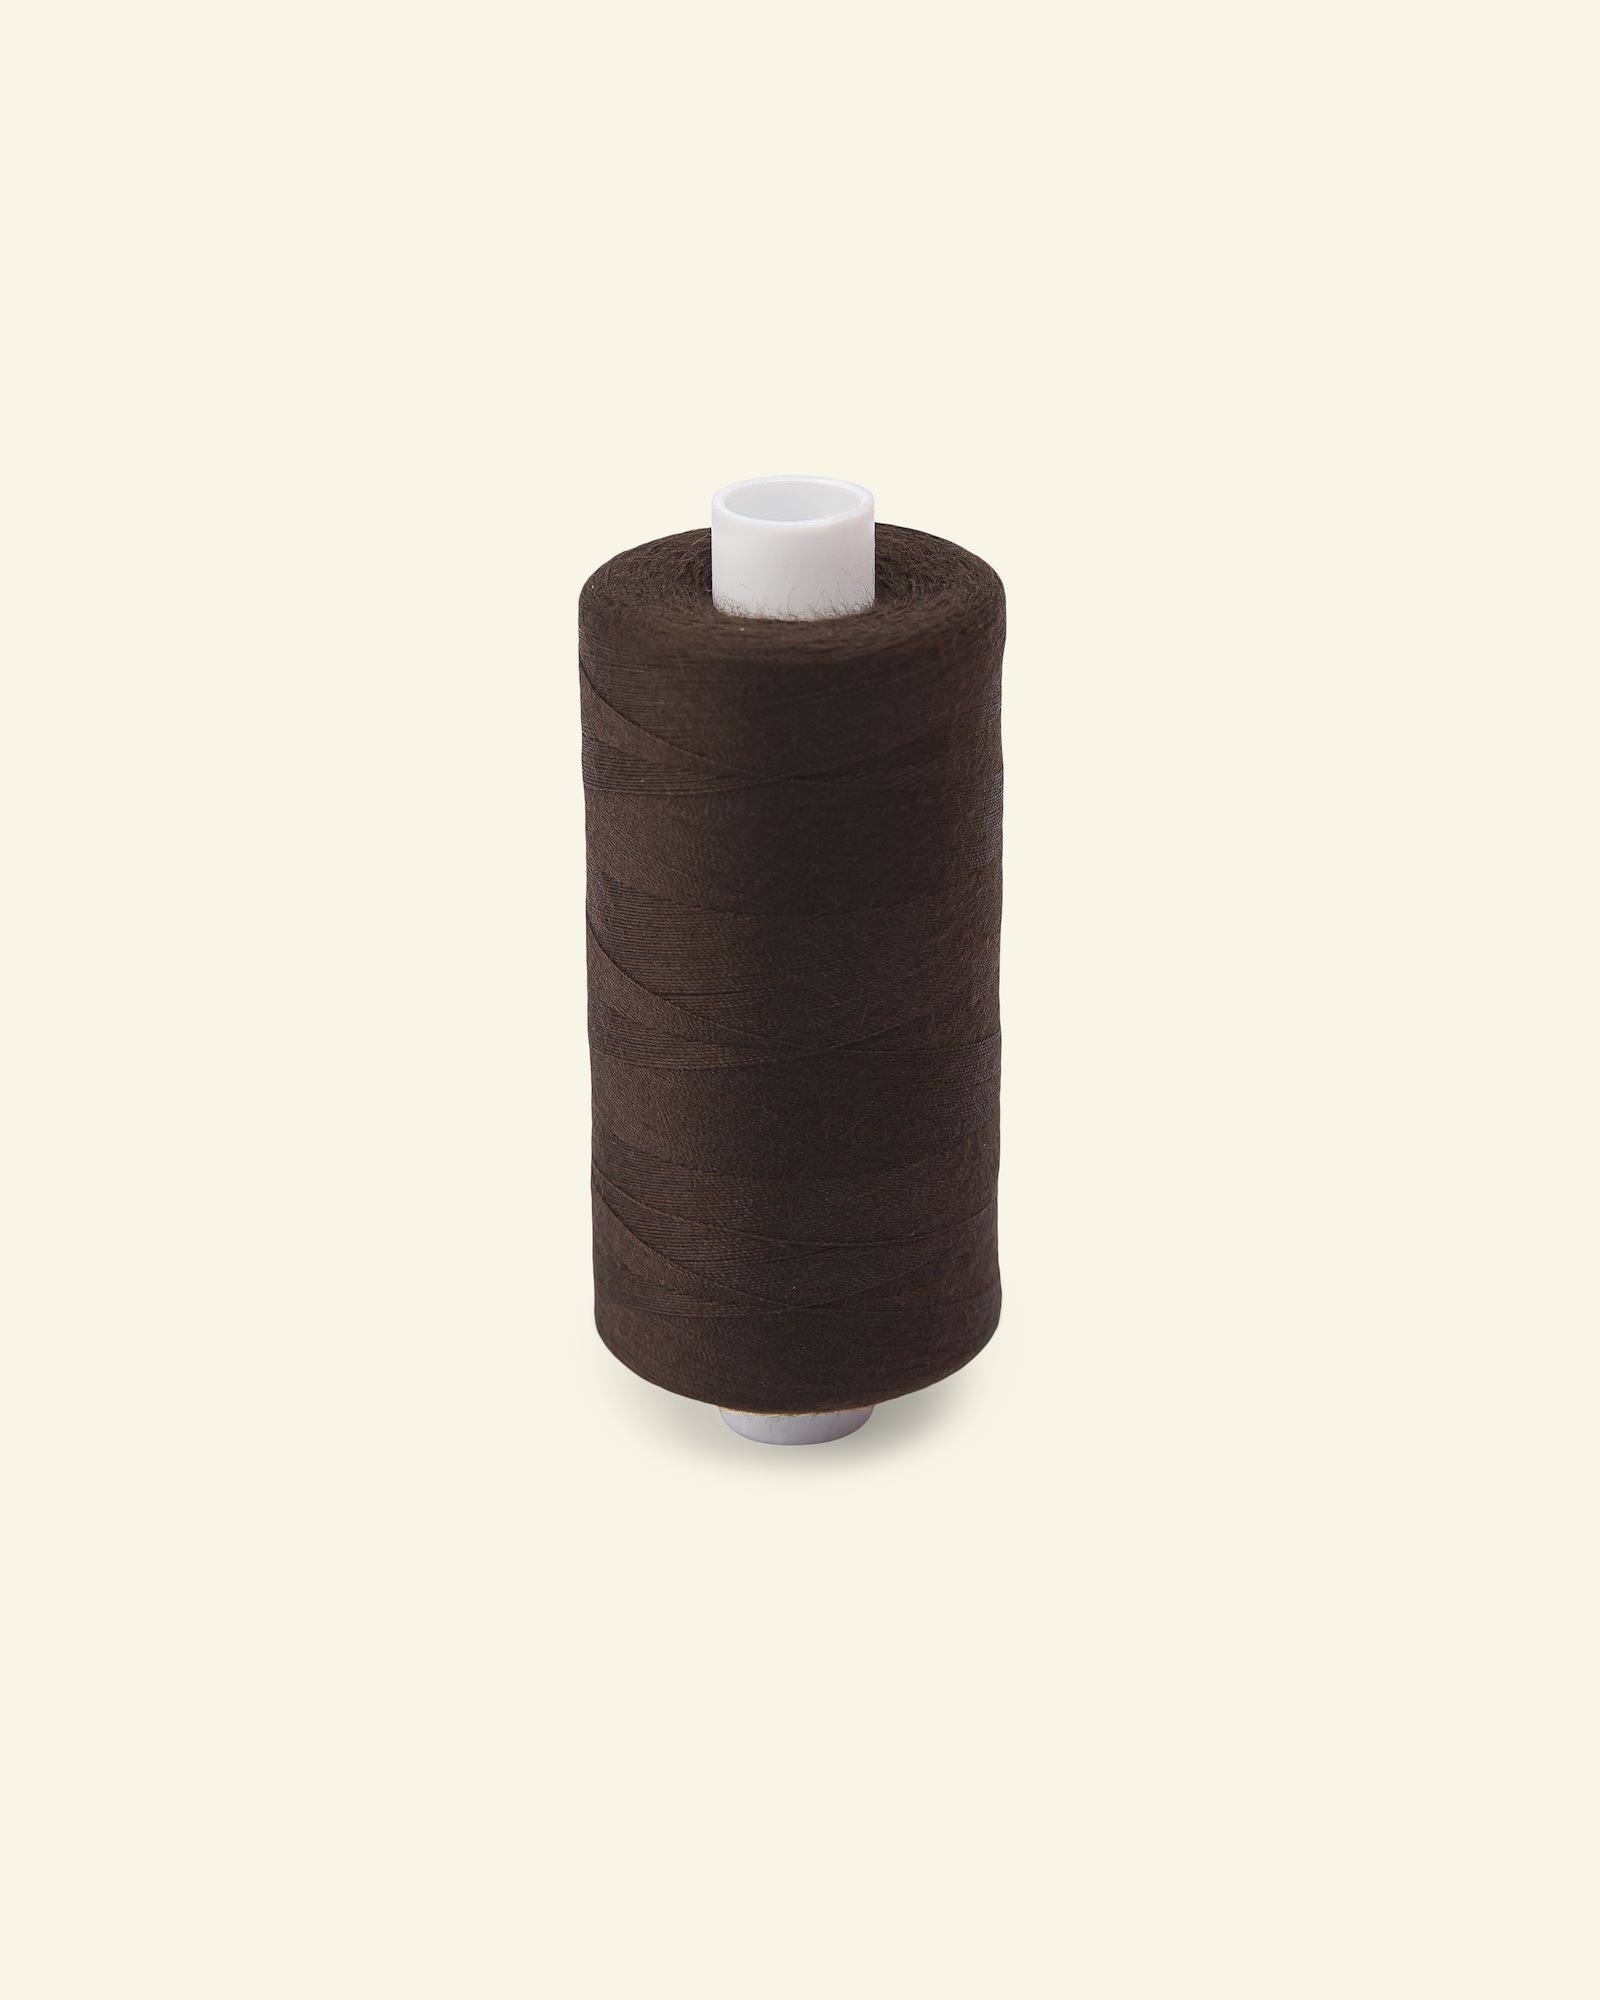 Sewing thread dark brown 1000m 12096_pack